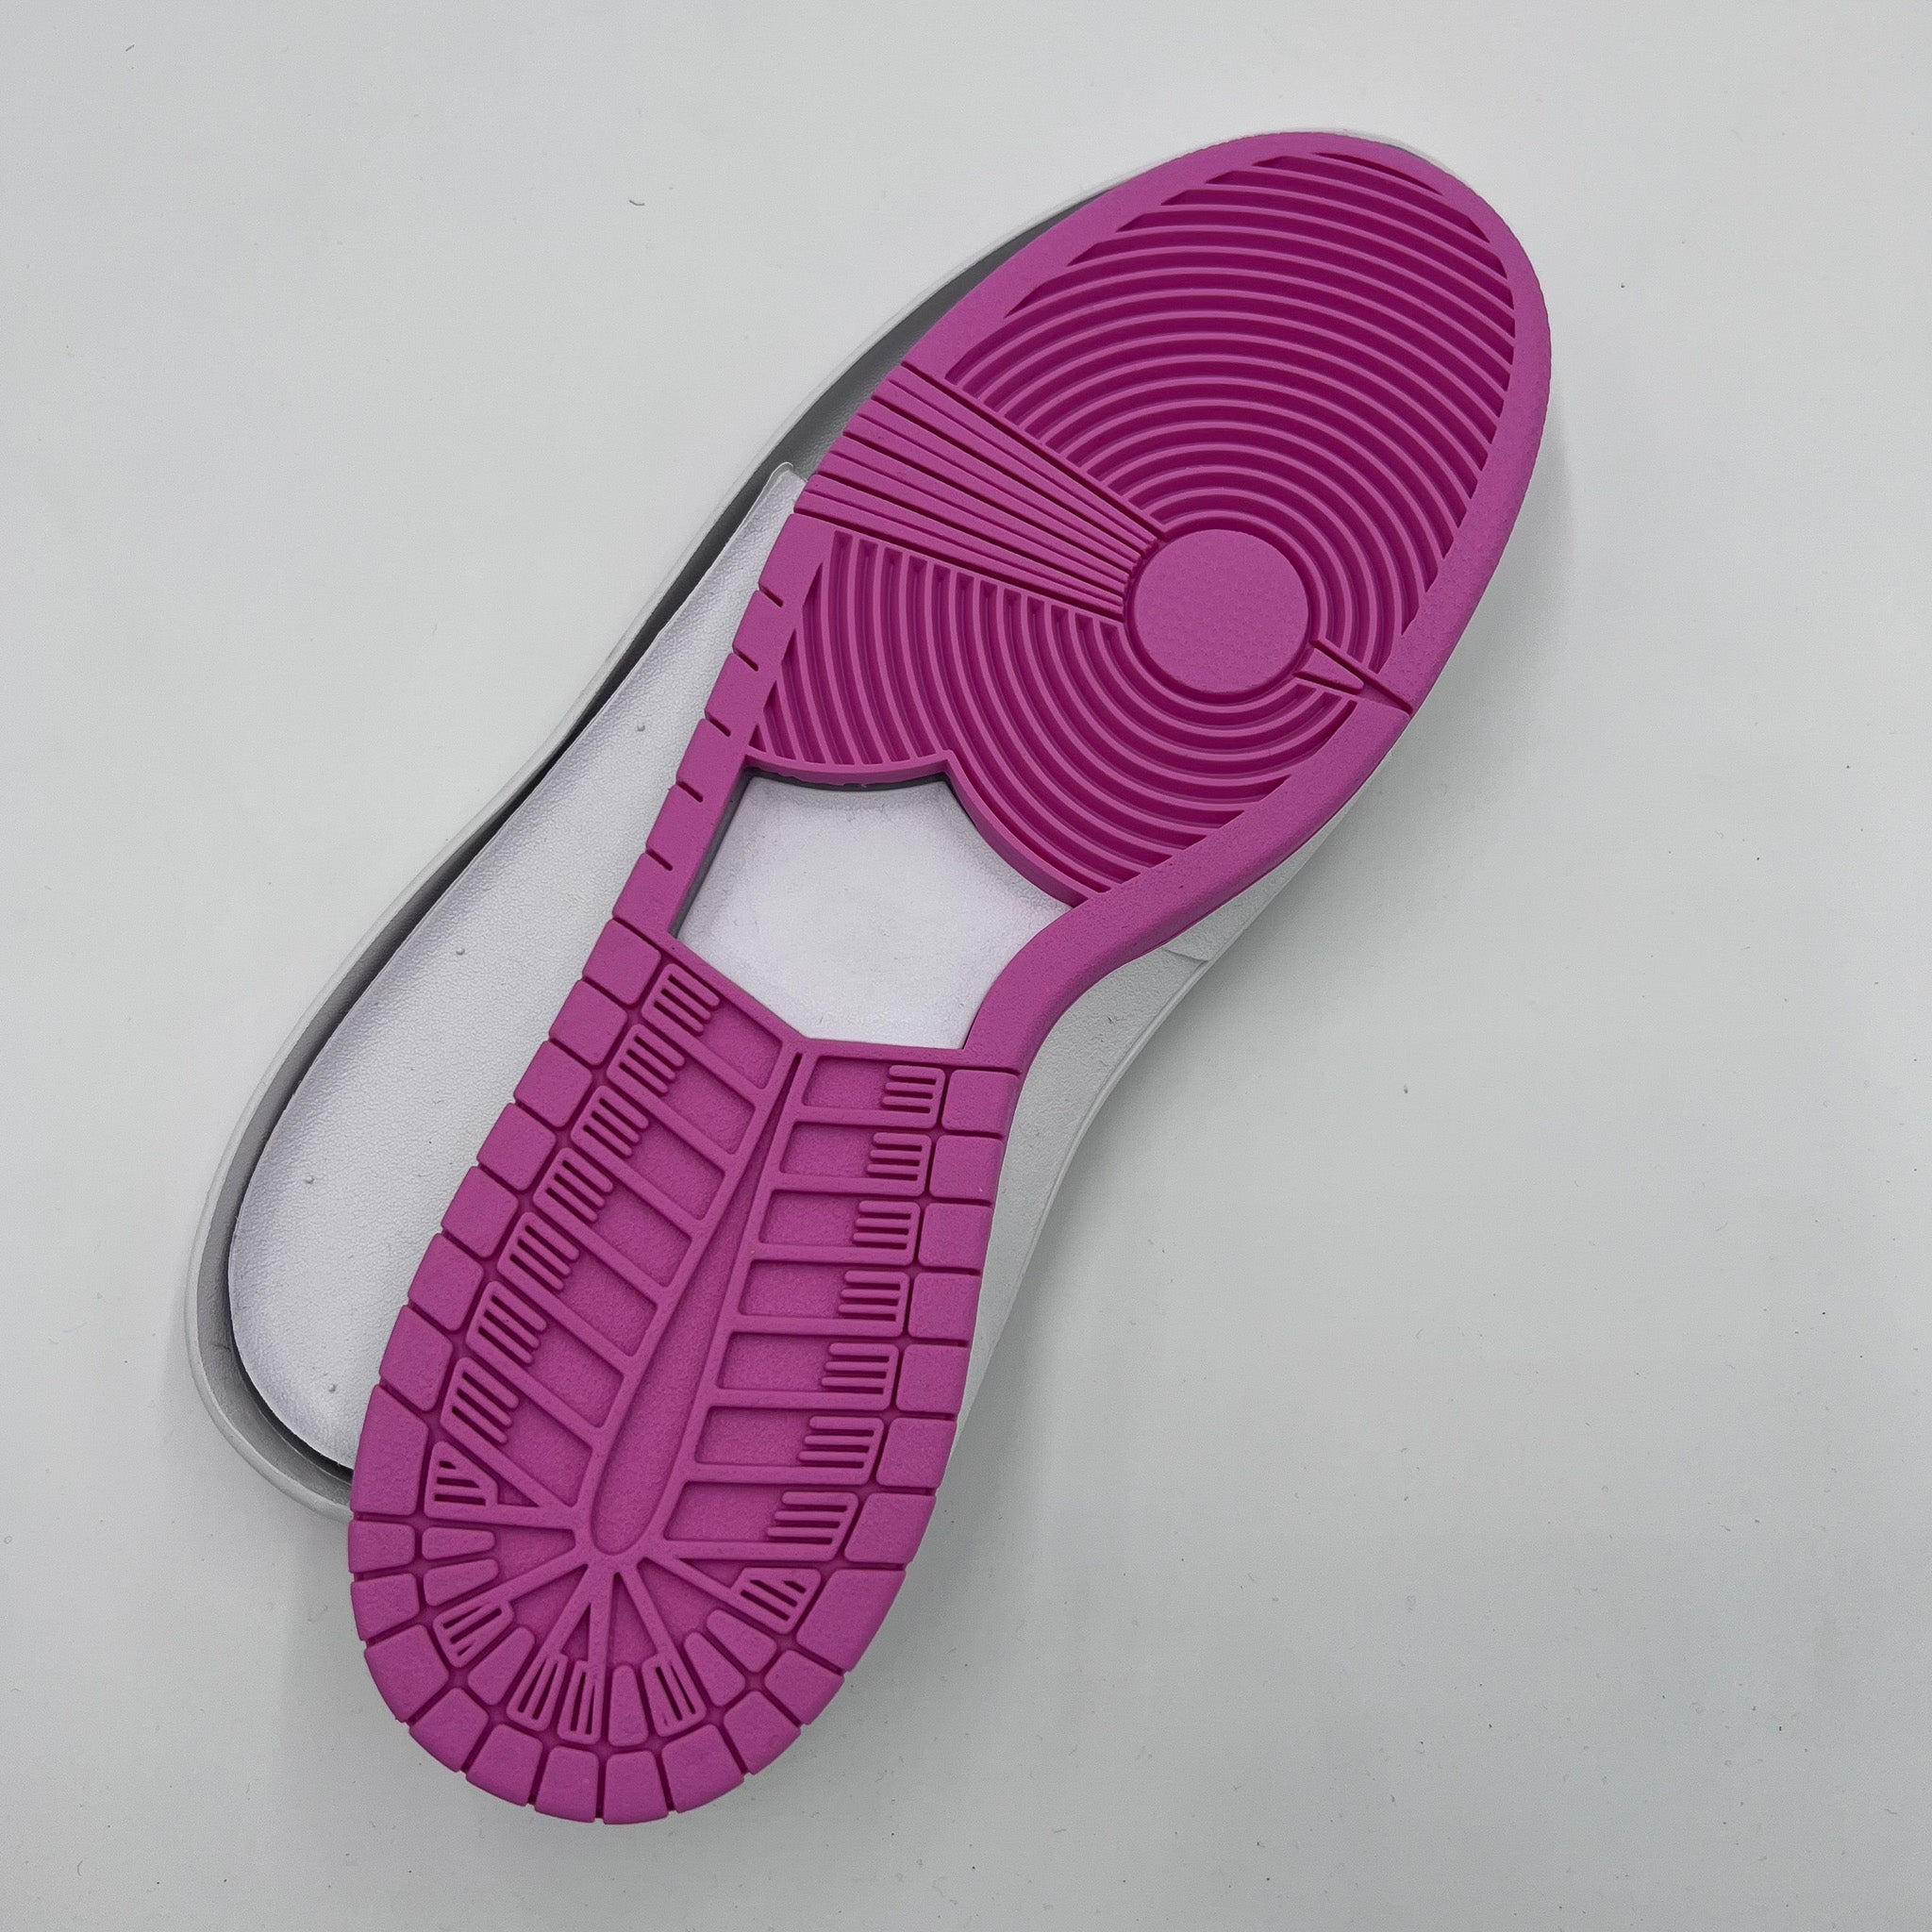 SkateBoard (SB Dunk) Shoe Soles, White/Pink